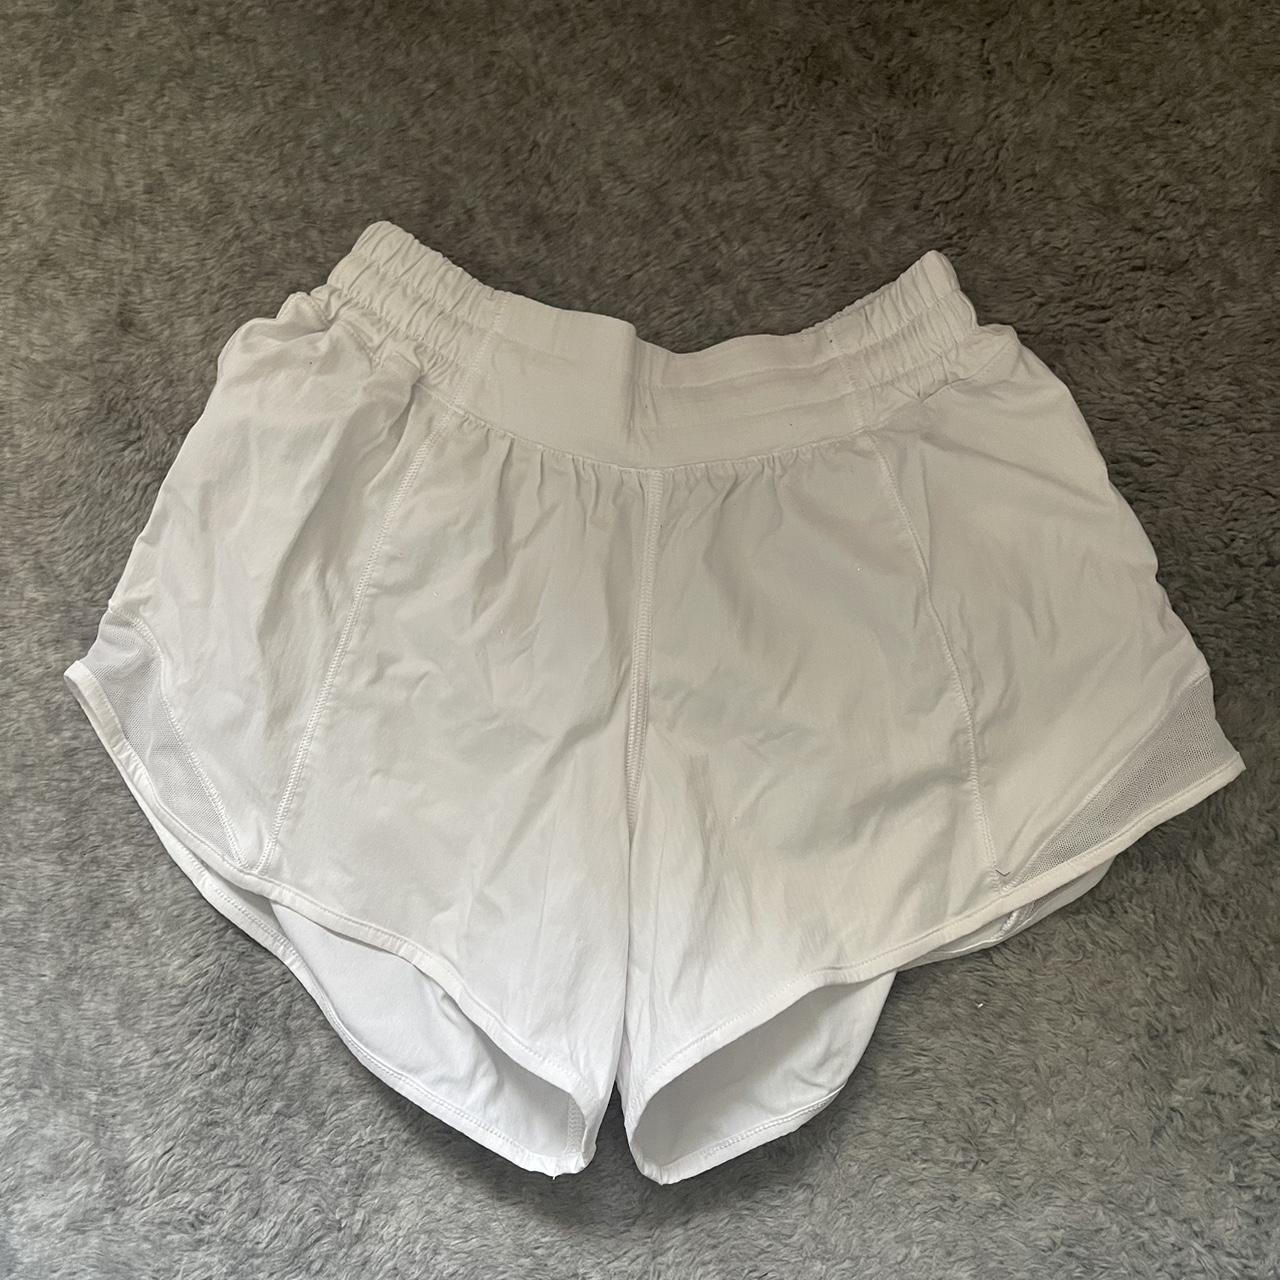 Lululemon 4 inch Hotty Hot shorts size 4 Bought - Depop